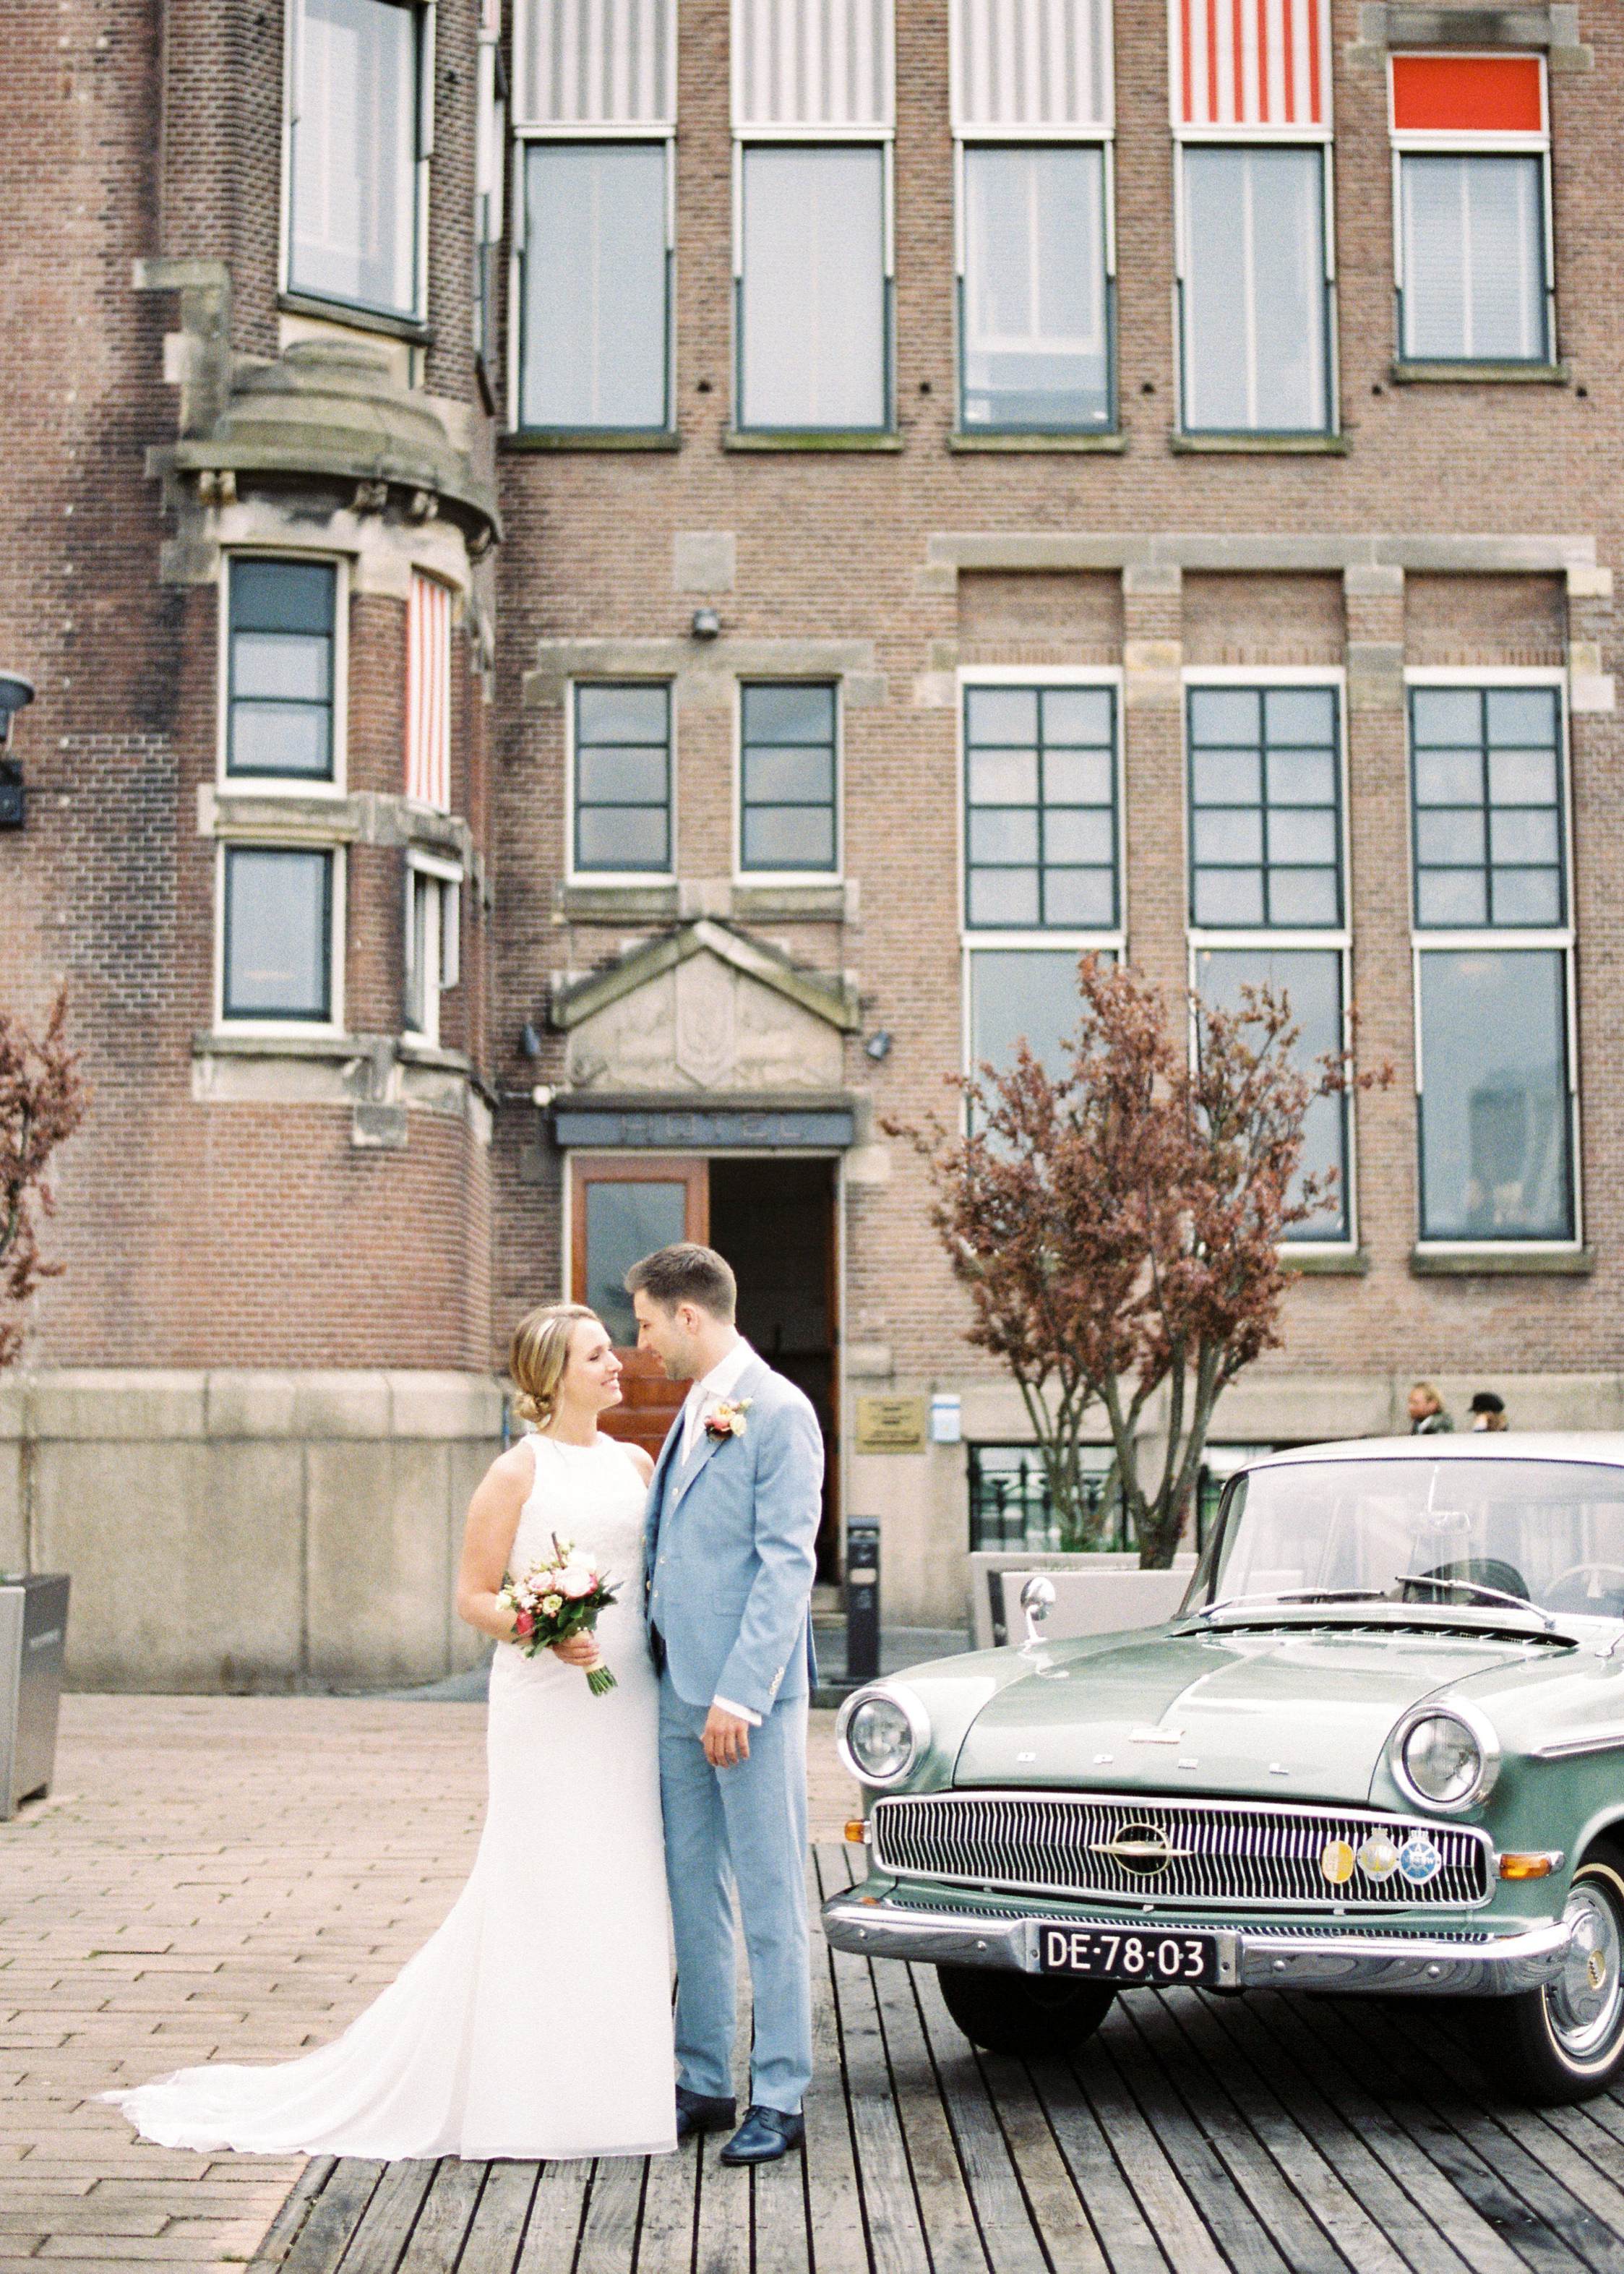 Wedding photographer Hotel New York Rotterdam - Vintage car 